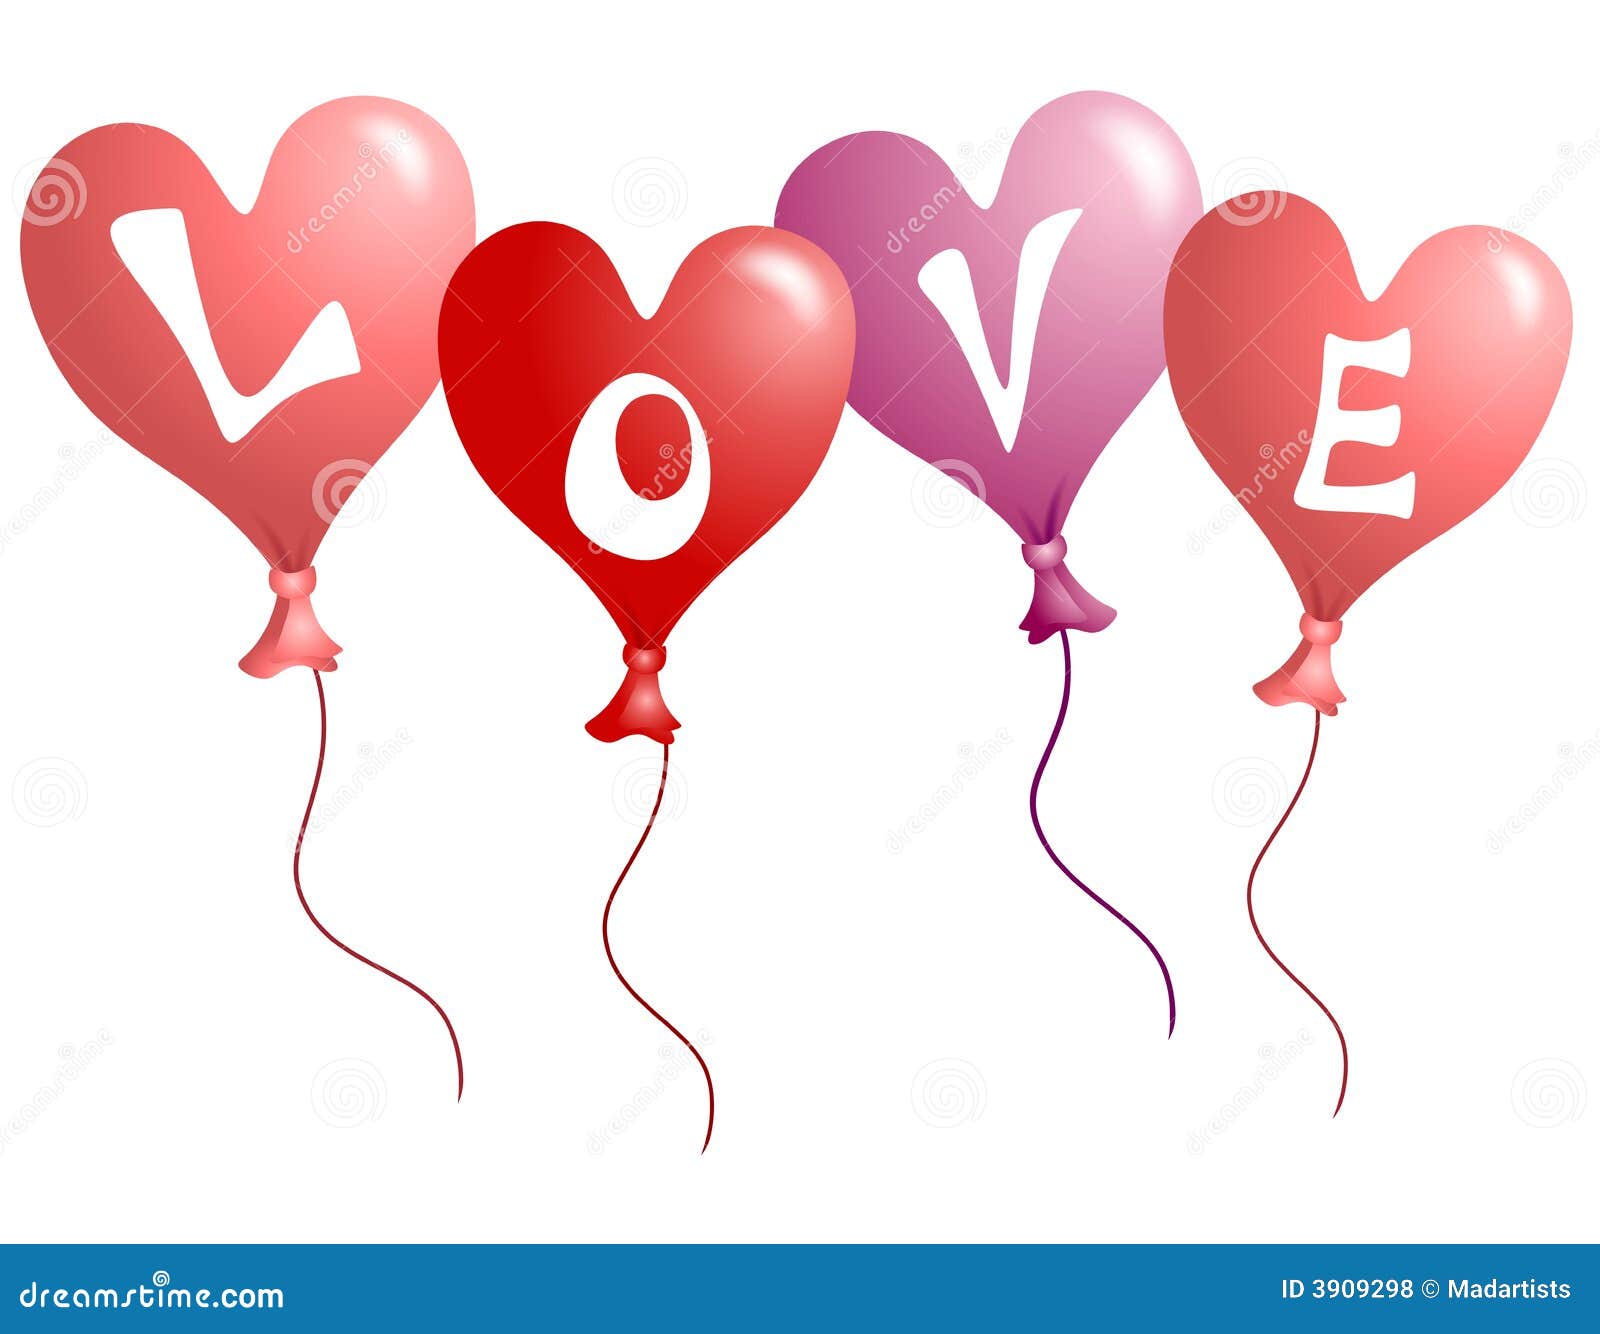 valentine balloon clip art - photo #16